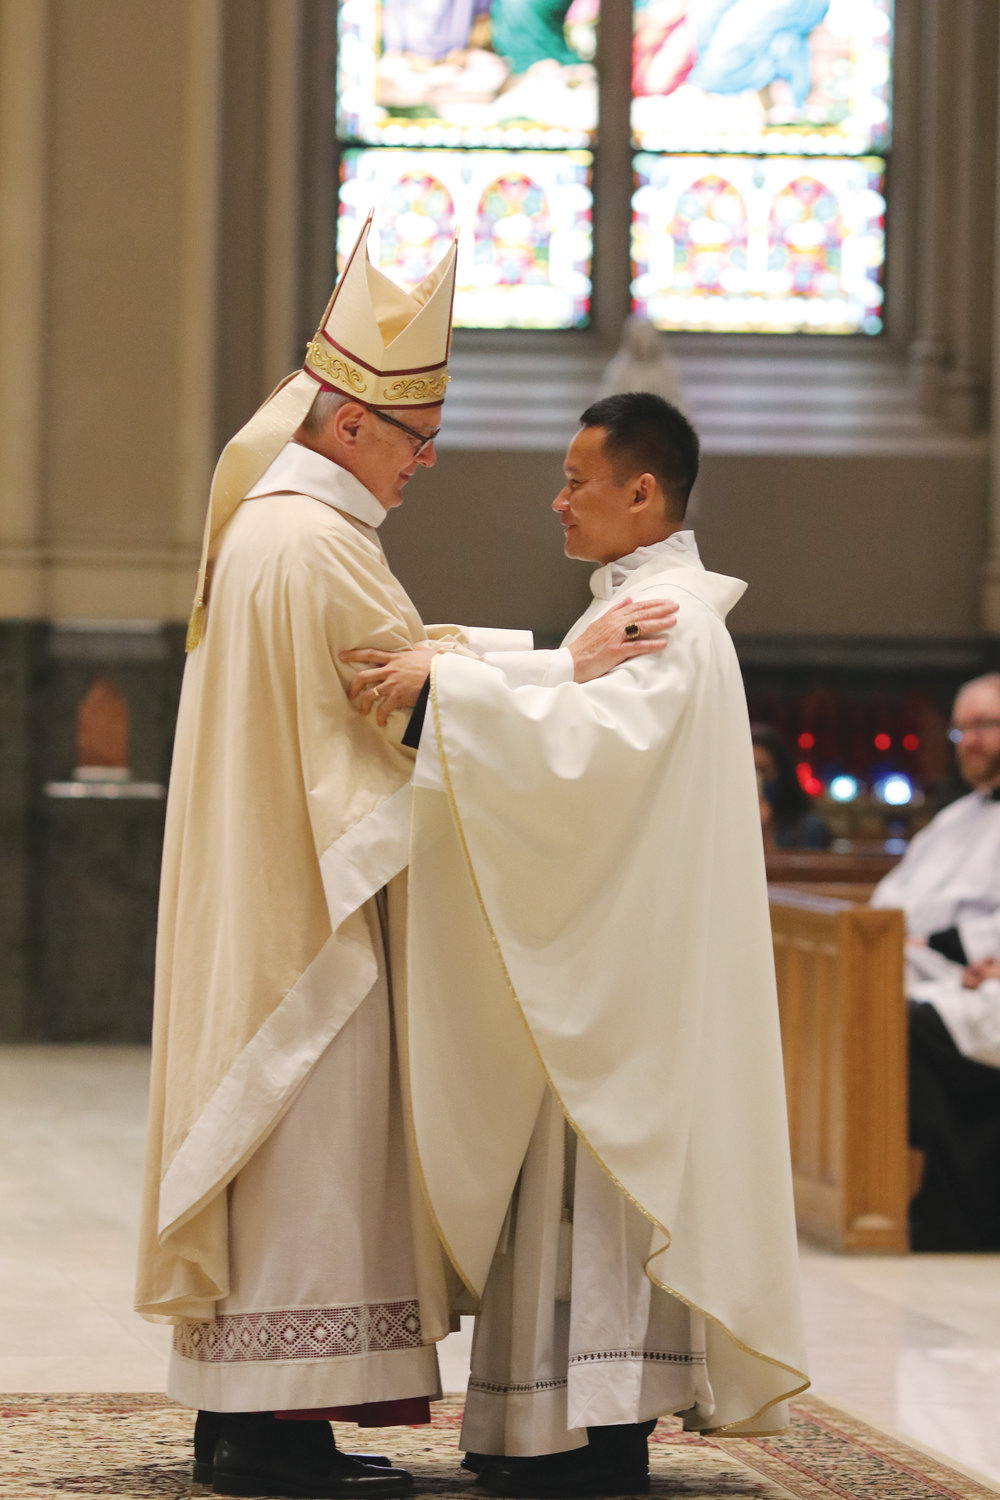 Bishop Thomas J. Tobin congratulates Father Nguyen.